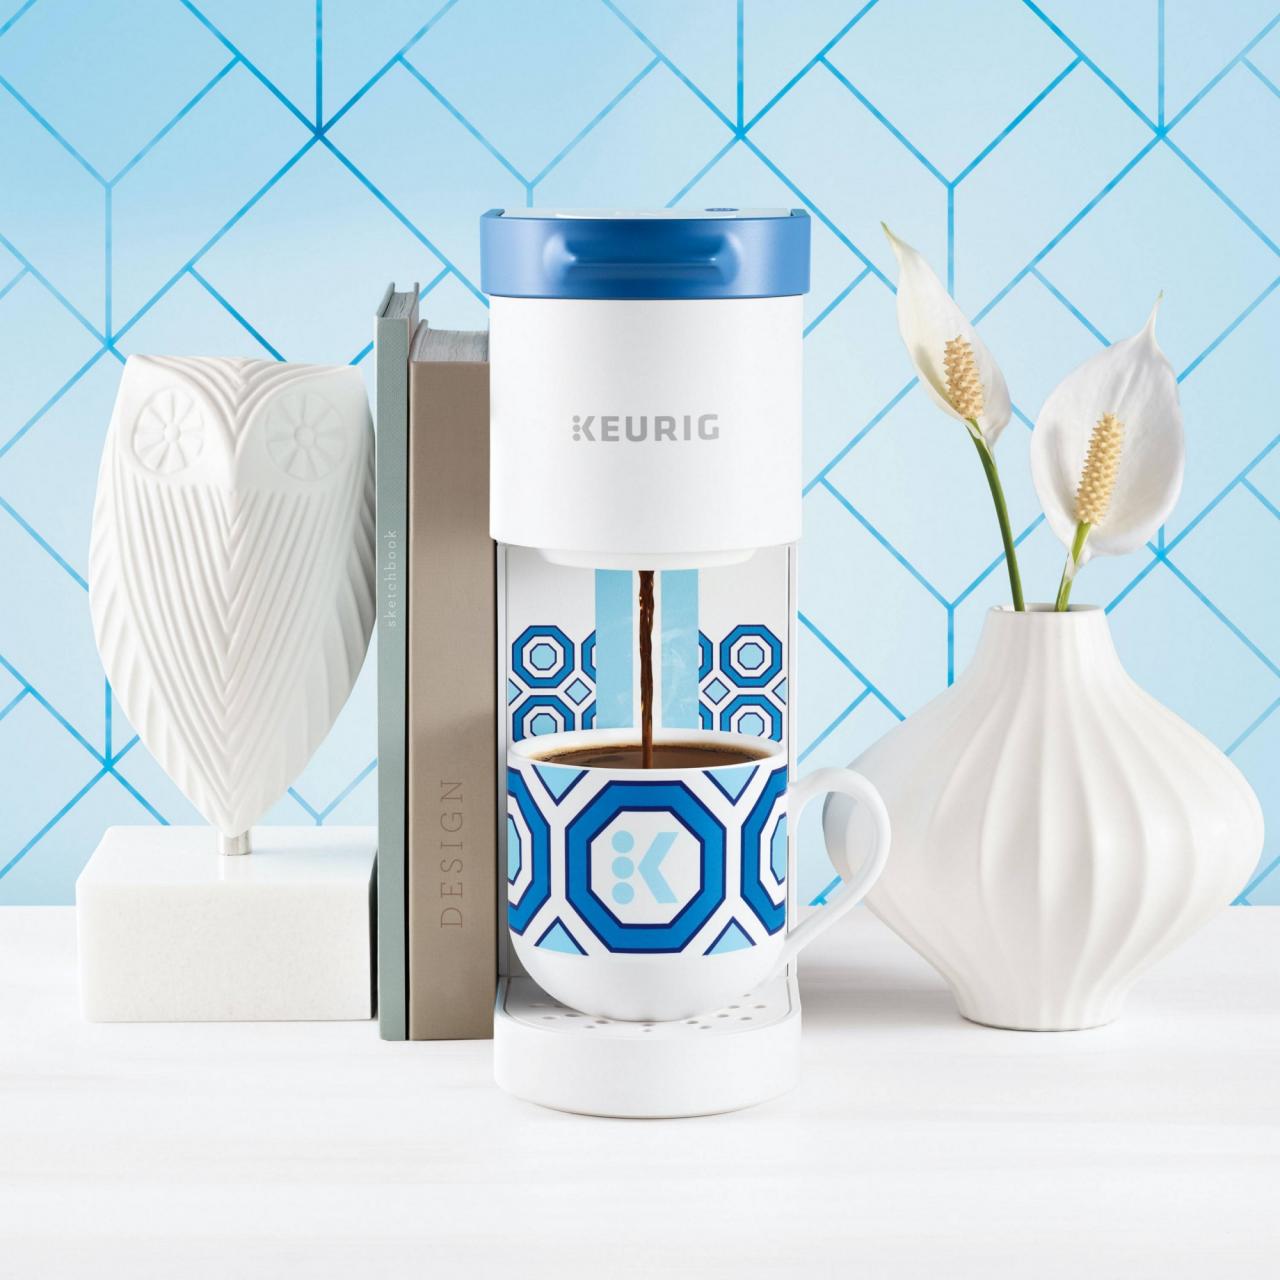 Keurig K-mini Single-serve K-cup Pod Coffee Maker : Target